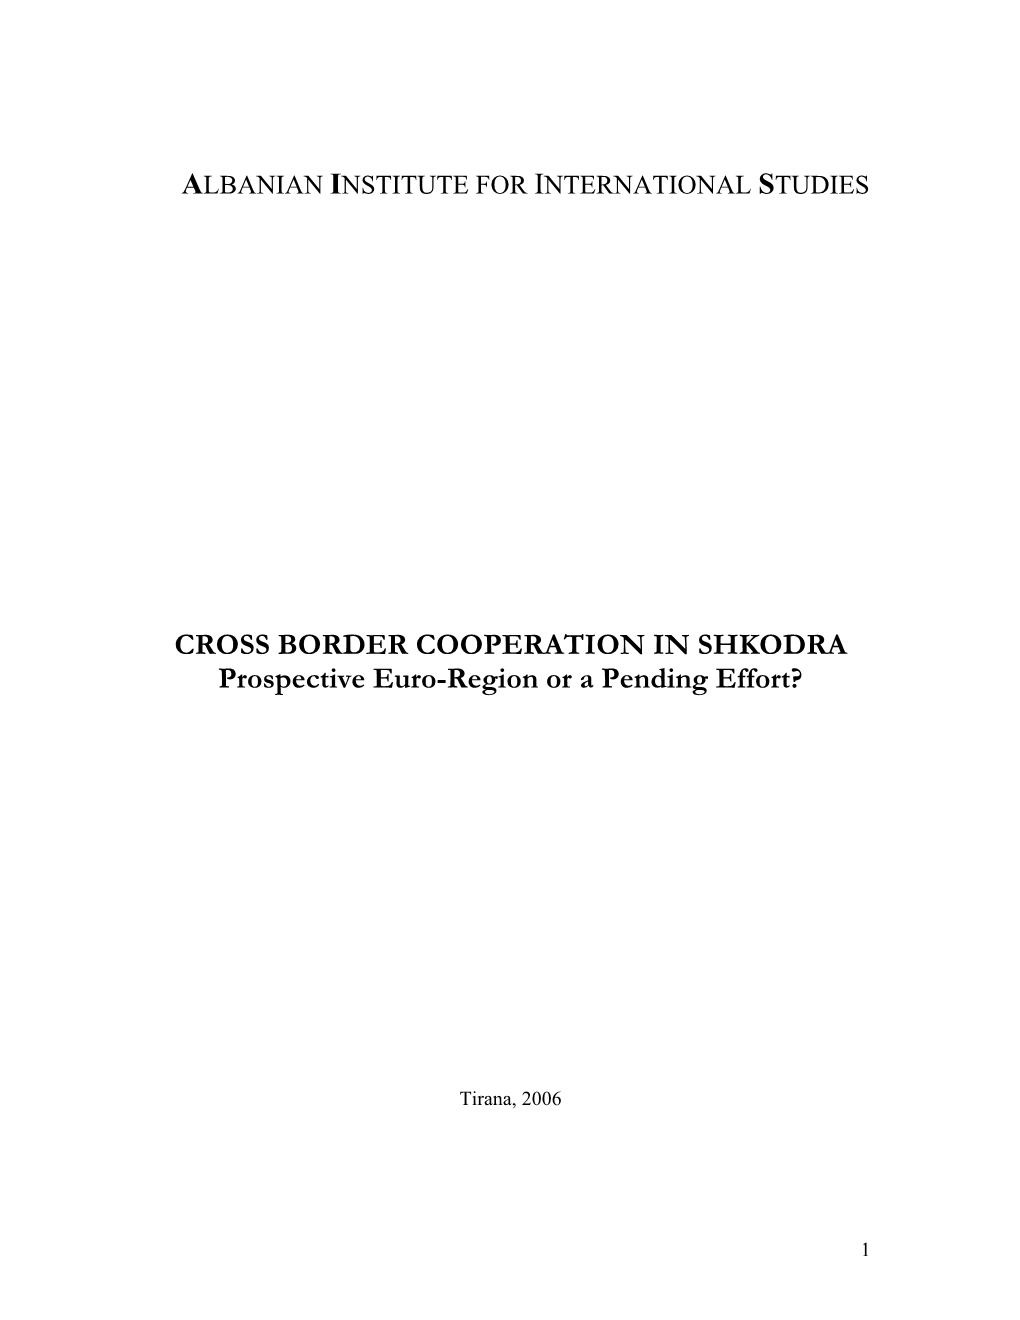 CROSS BORDER COOPERATION in SHKODRA Prospective Euro-Region Or a Pending Effort?